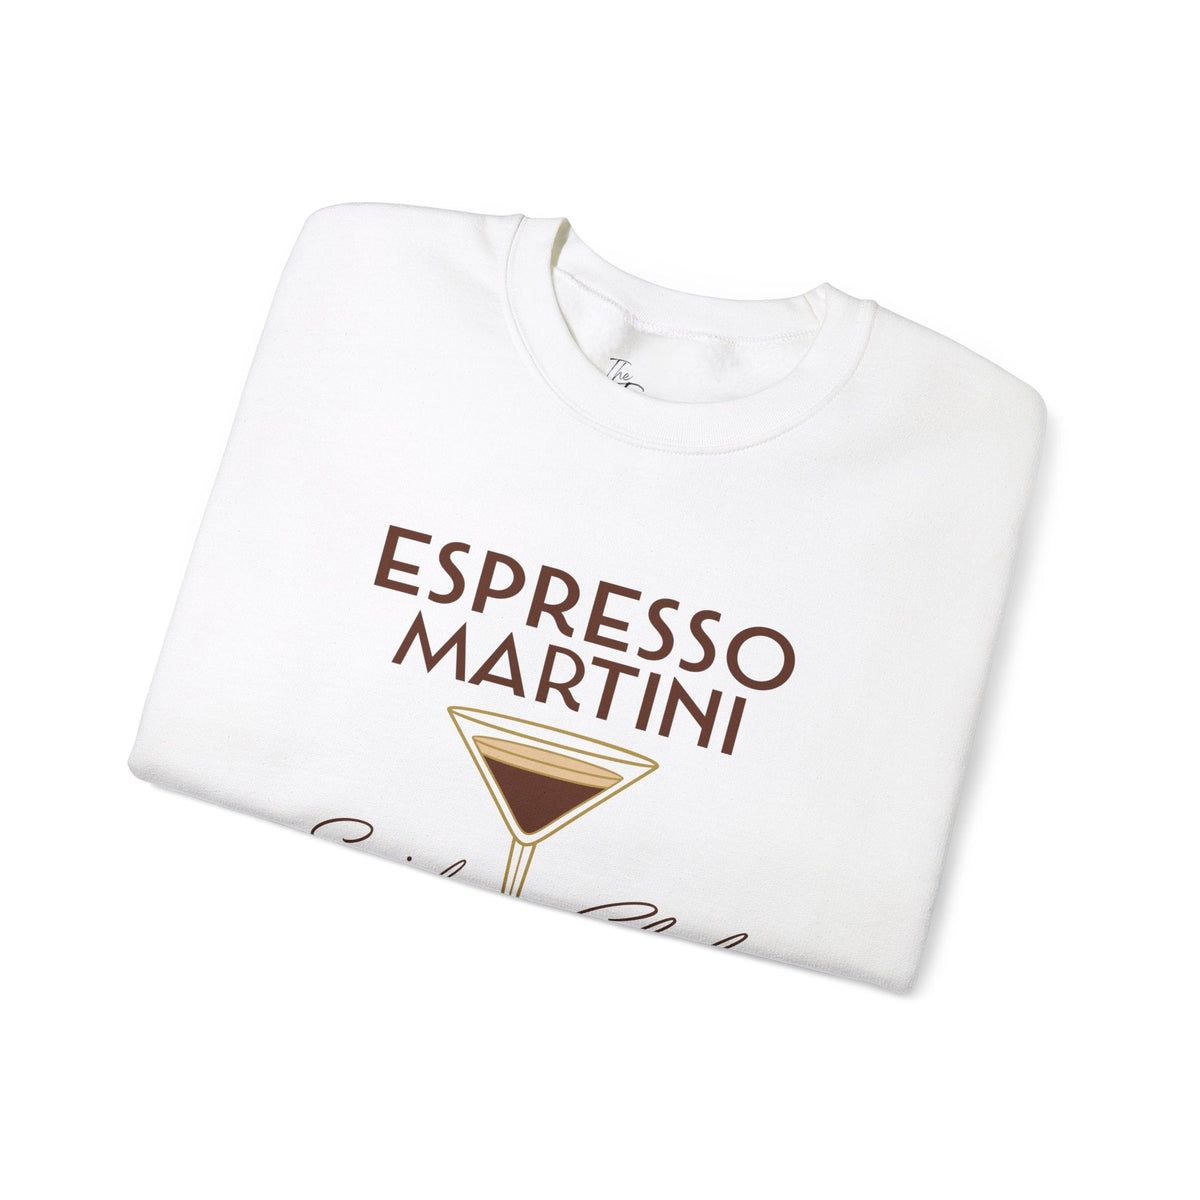 Espresso Martini Social Club Sweatshirt | Girls Night | Cocktail Lover | Martini's Sweatshirt TheFringeCultureCollective